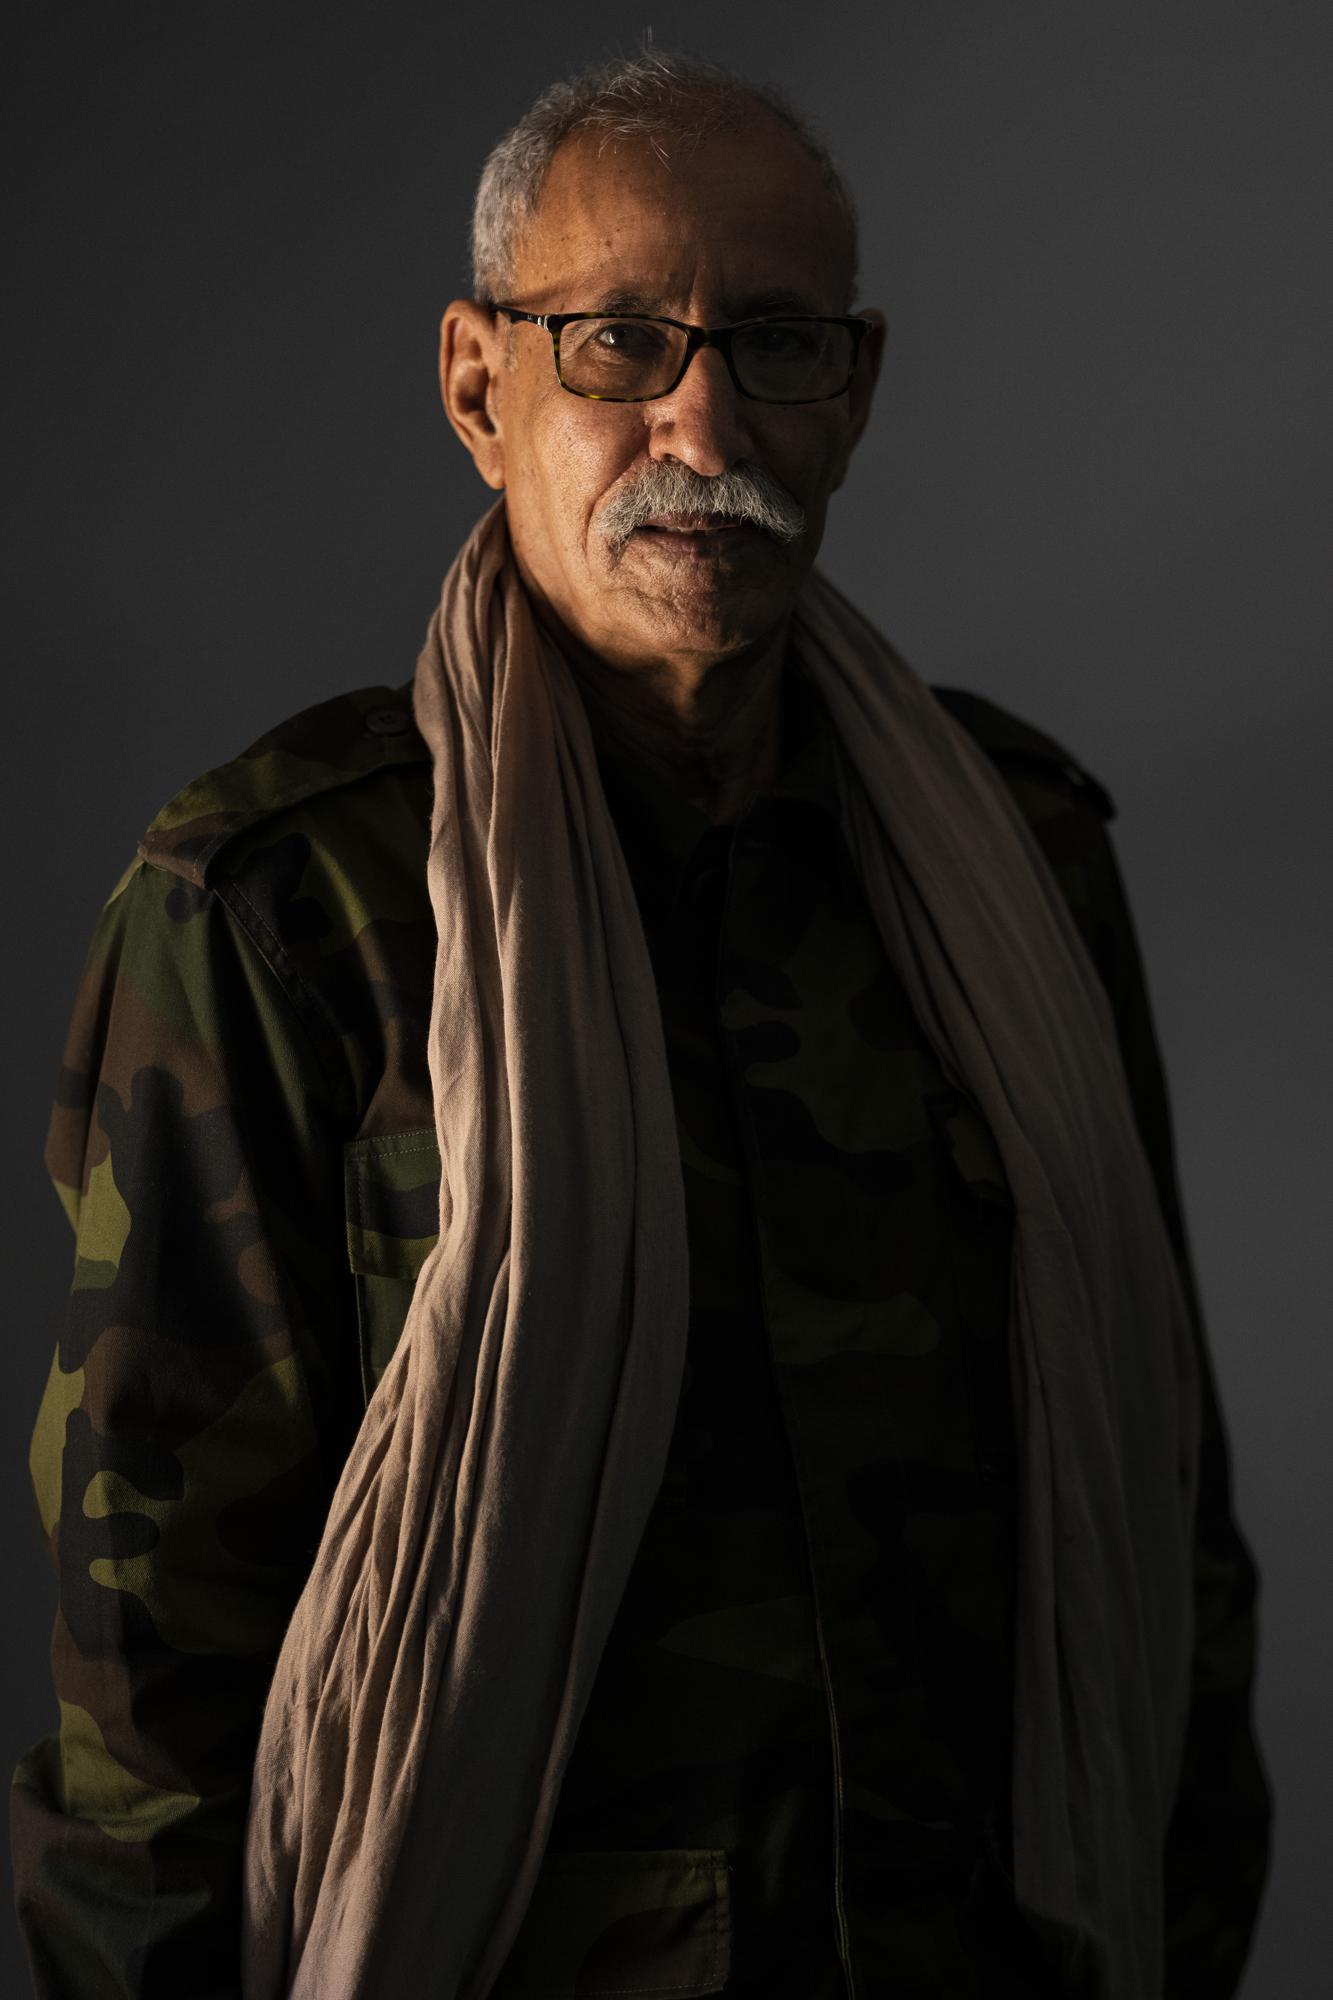 Brahim Ghali, head of the Polisario Front and the self-declared Sahrawi Democratic Arab Republic, poses for a portrait in Boujdour refugee camp, Algeria, Saturday, Oct. 16, 2021. (AP Photo/Bernat Armangue)